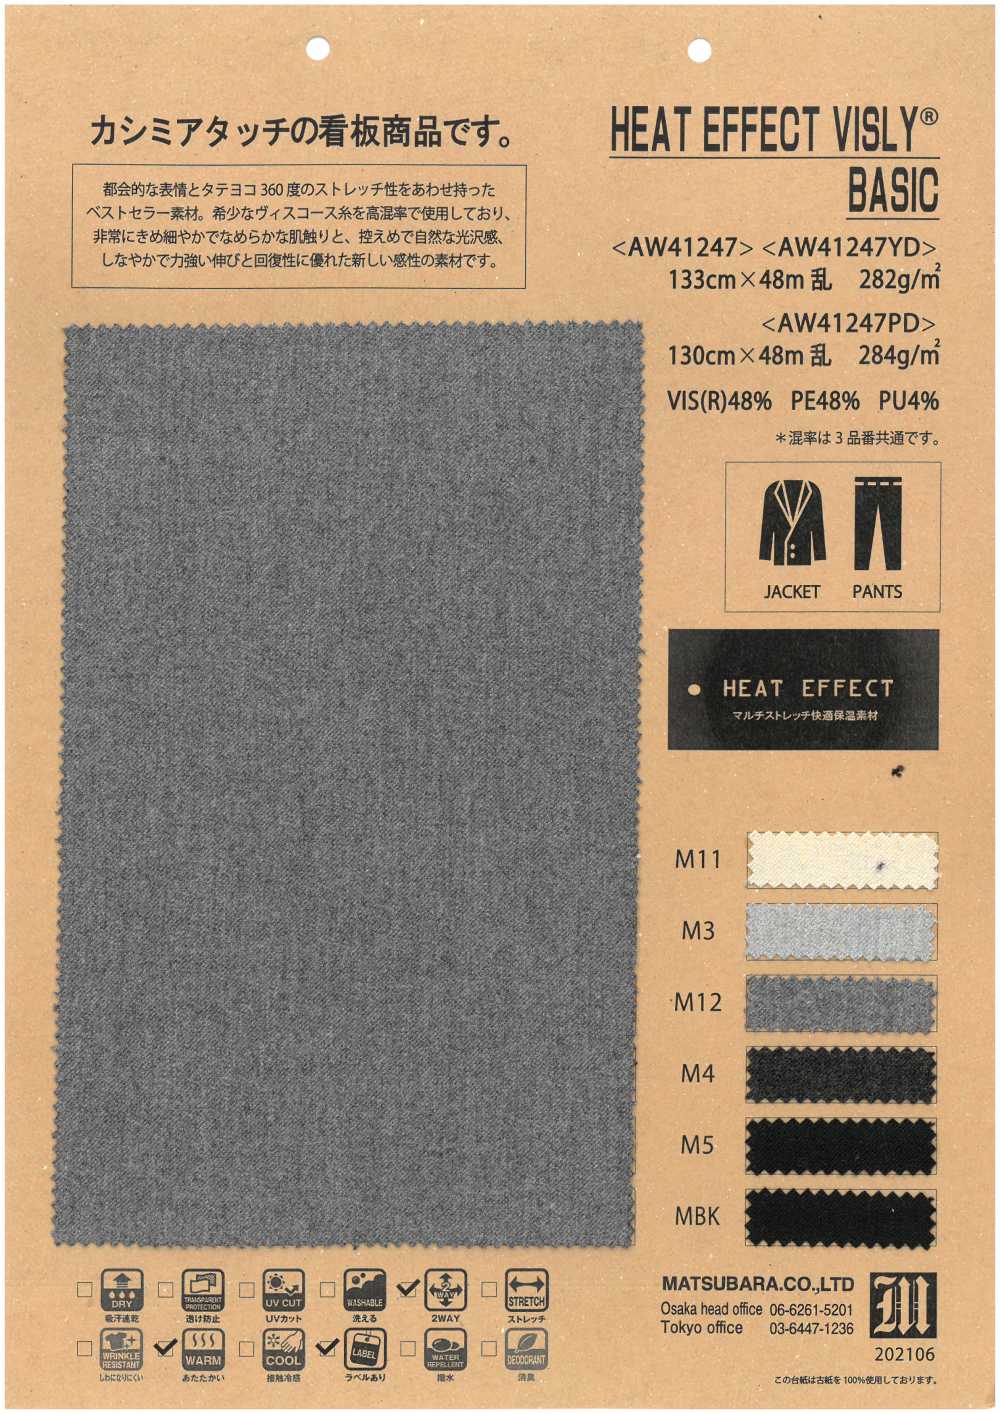 AW41247PD Heat Effect Bisley Basic[Textile / Fabric] Matsubara